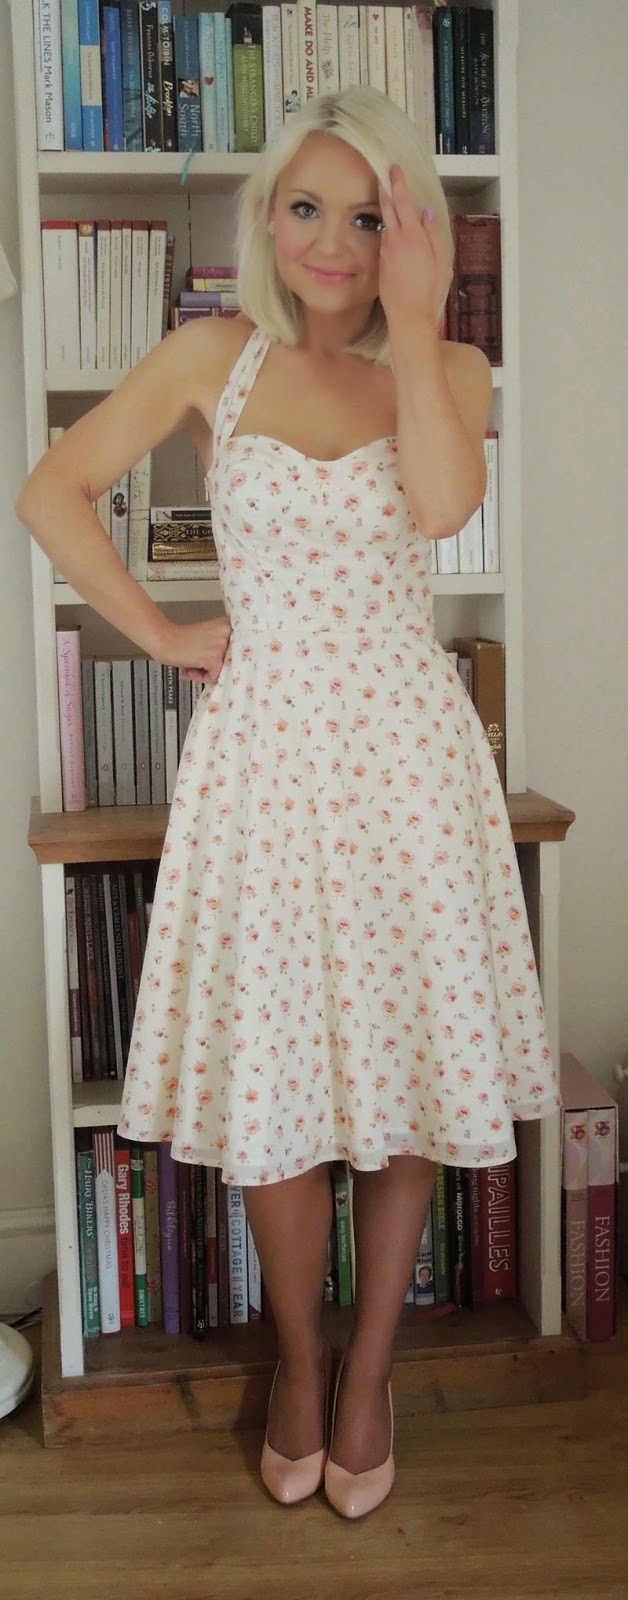 Patrón gratis: vestido de fiesta estilo "retro" 1950 | contra crisis yo | Bloglovin'